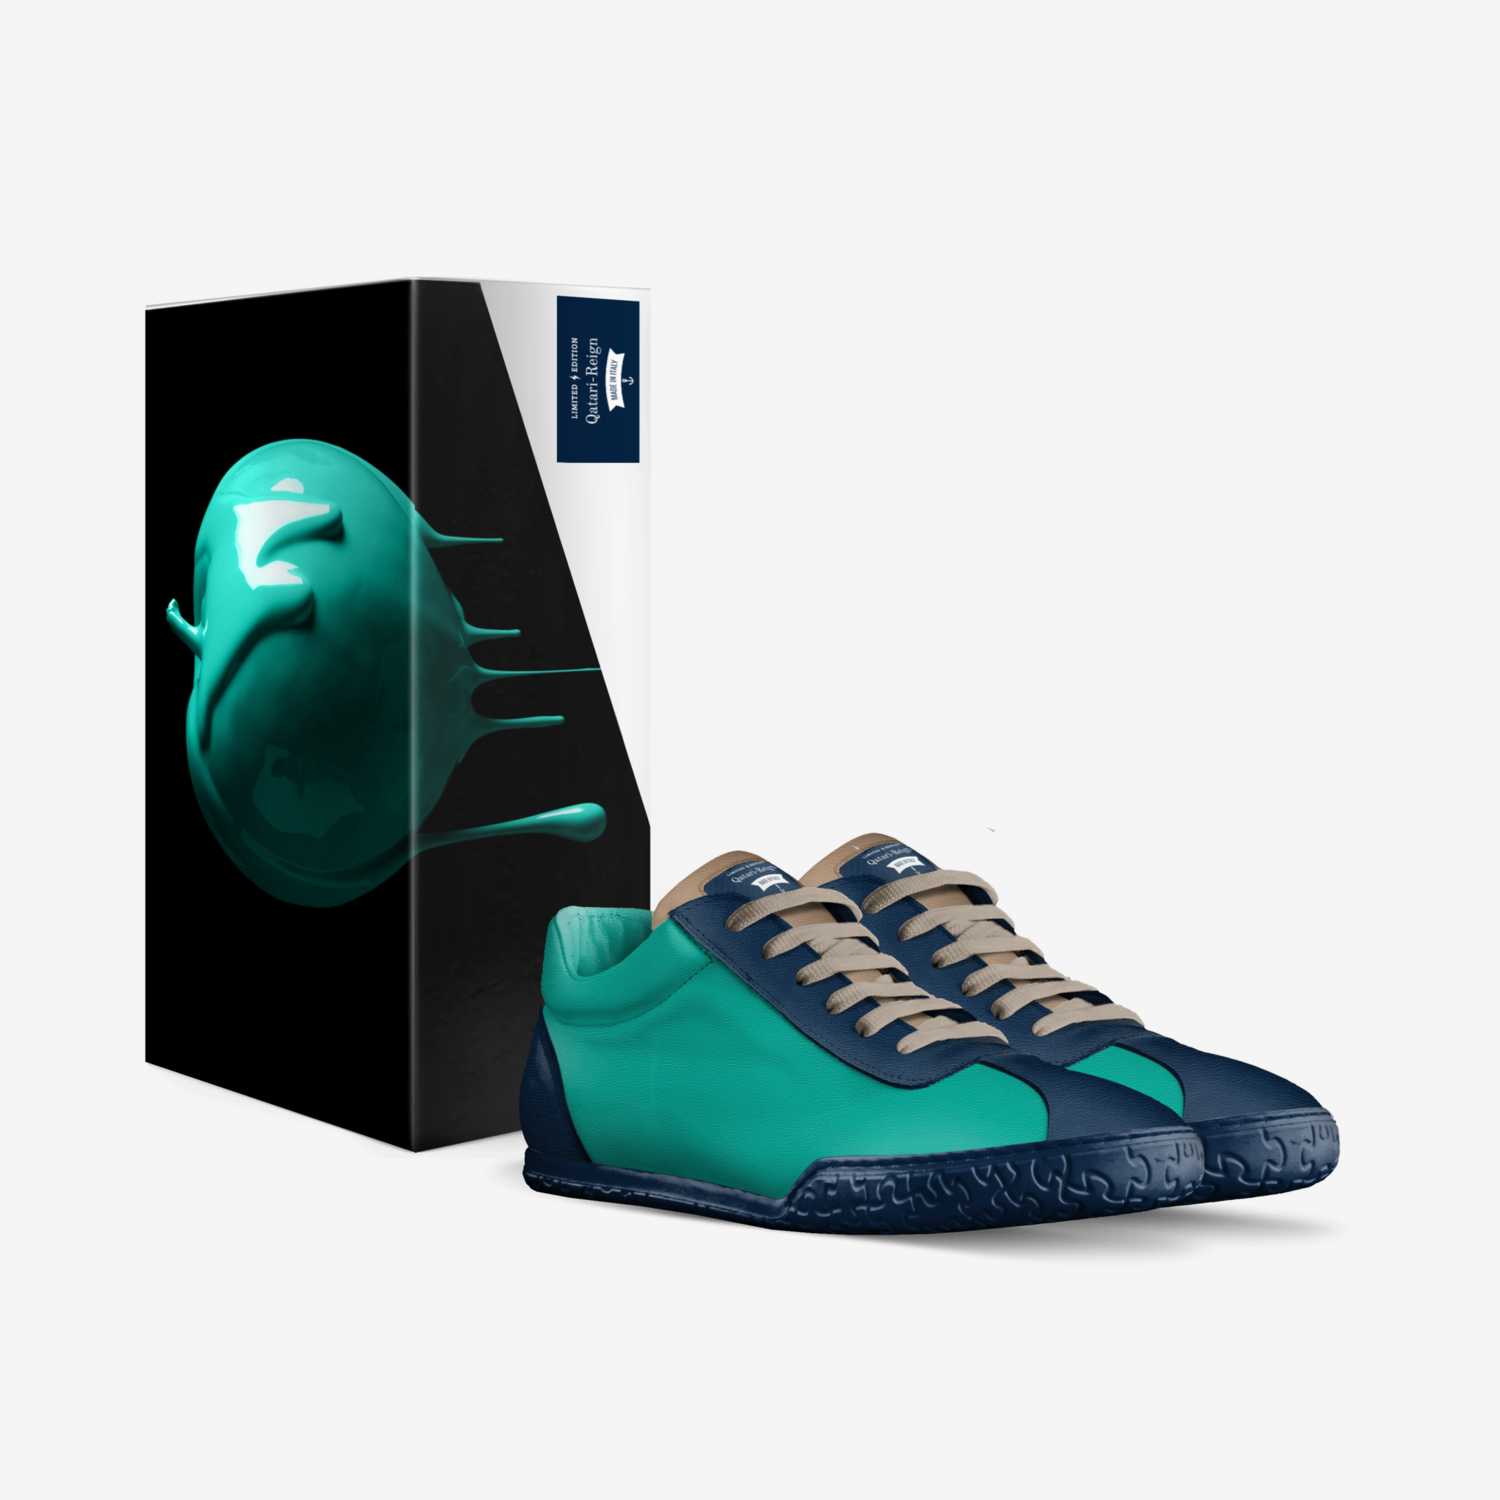 SemiSociety custom made in Italy shoes by Shakiya Gadson | Box view